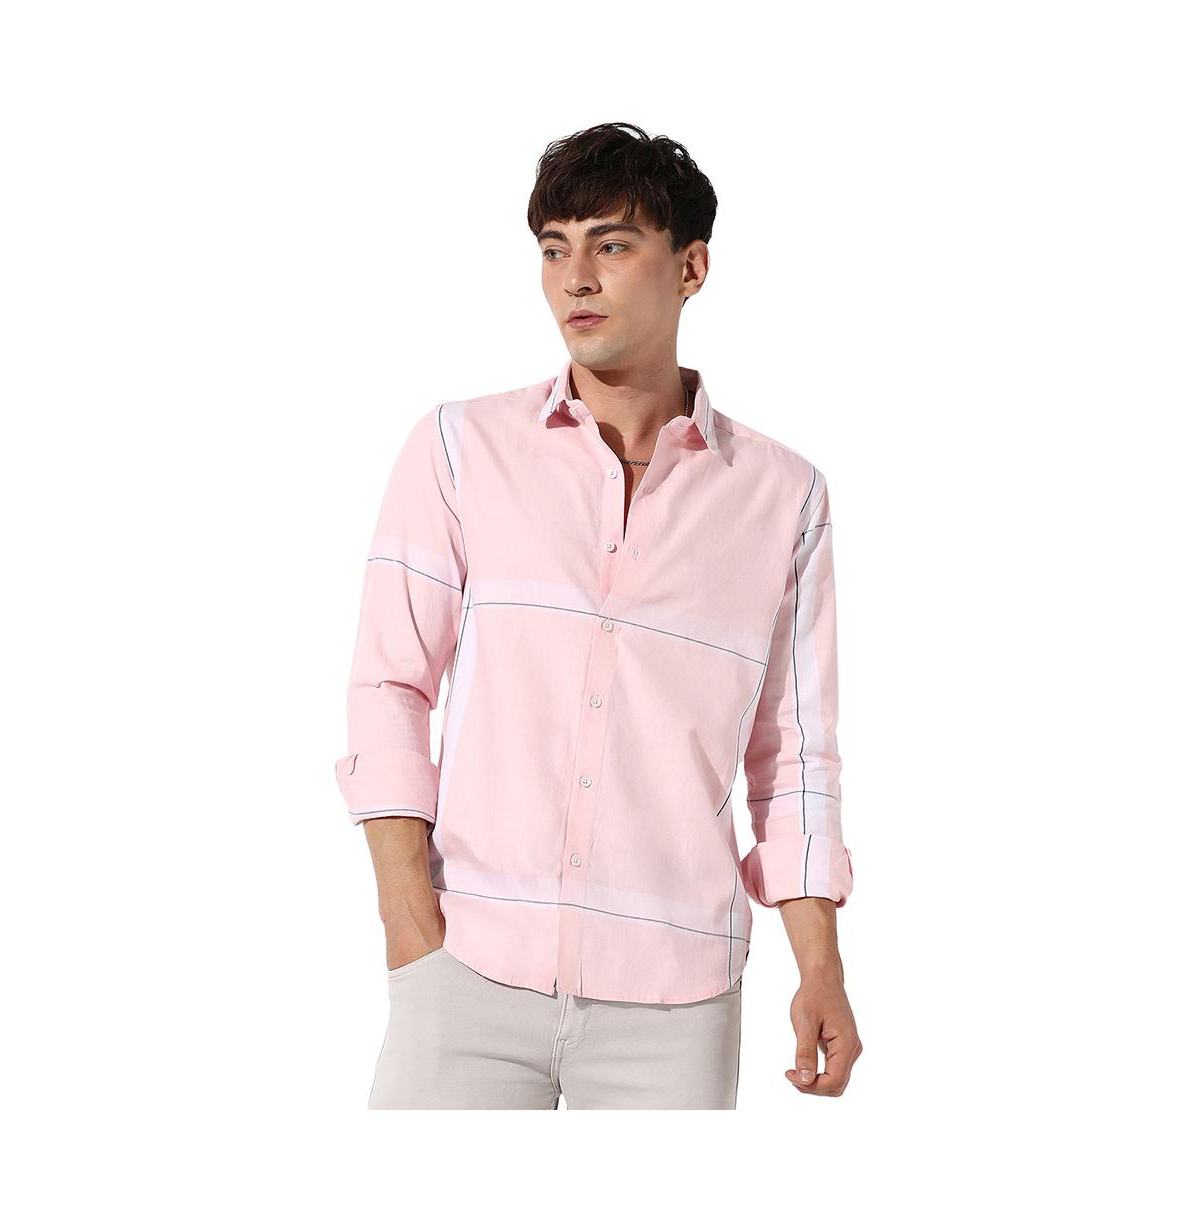 Men's Pastel Striped Button Up Shirt - Pink